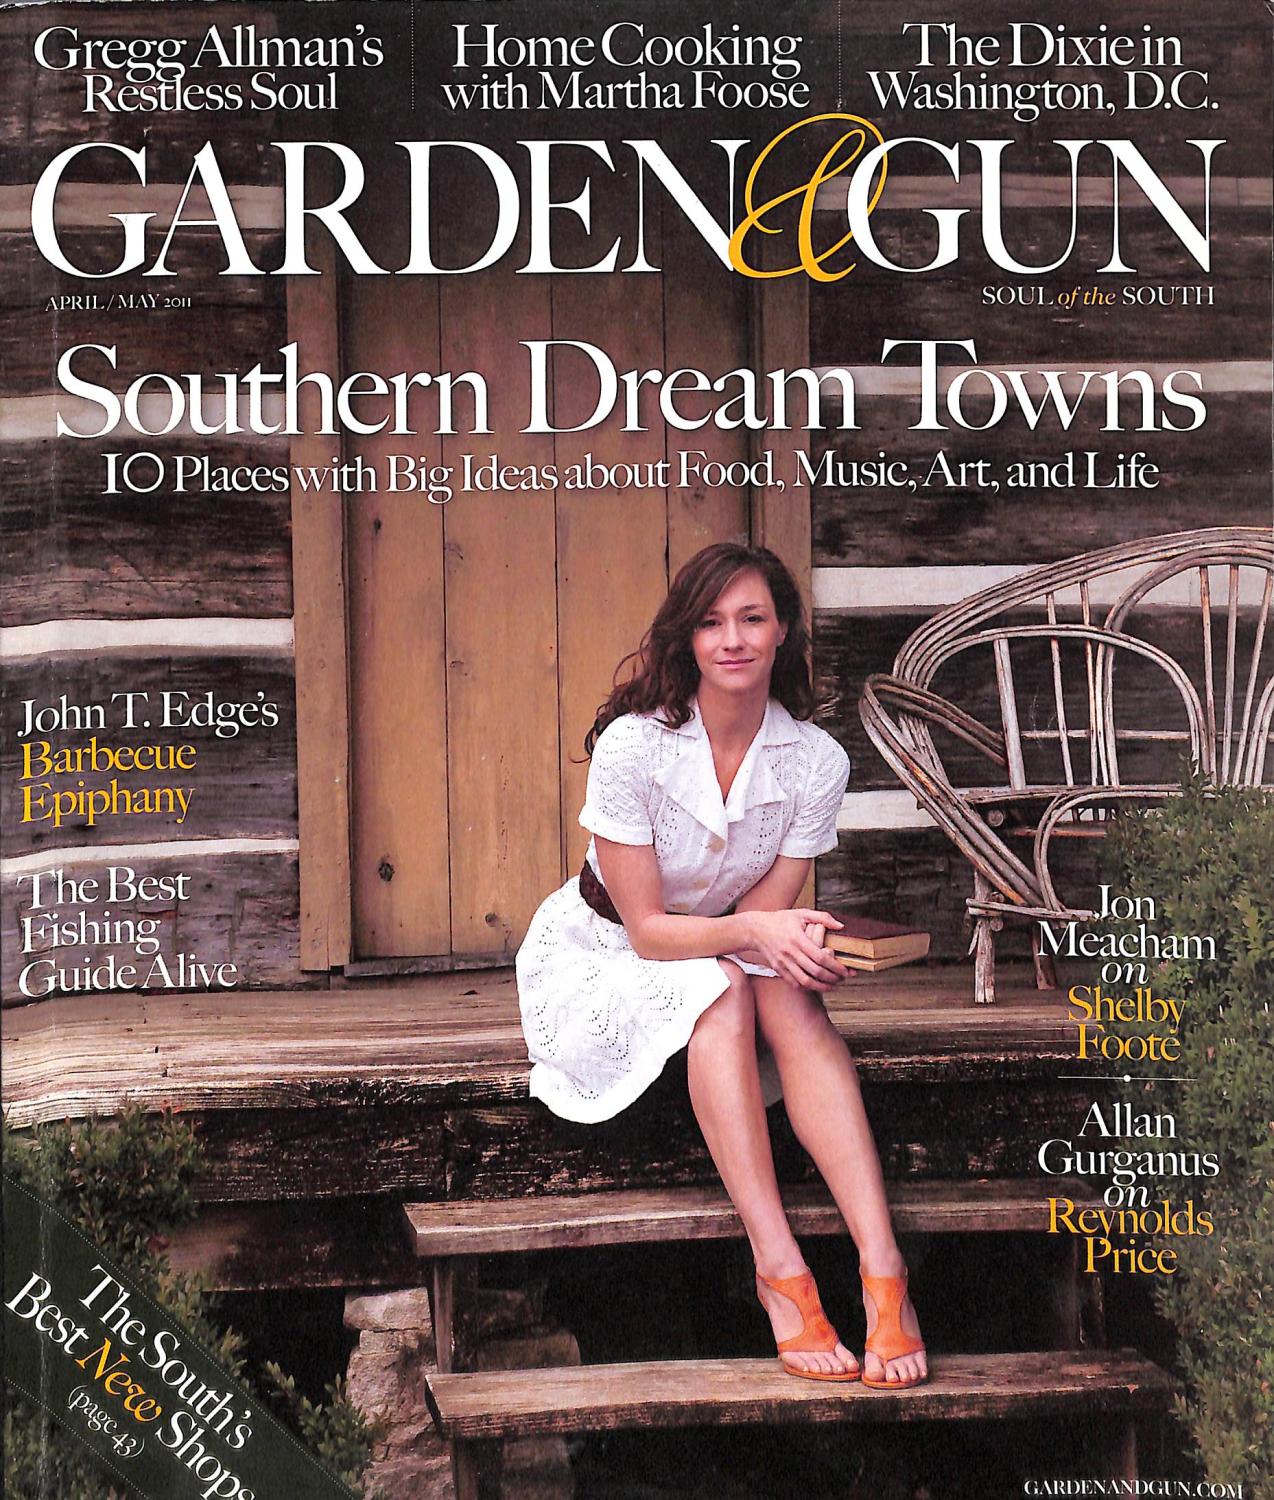 Garden Gun Magazine Southern Dream Towns April May 2011 The